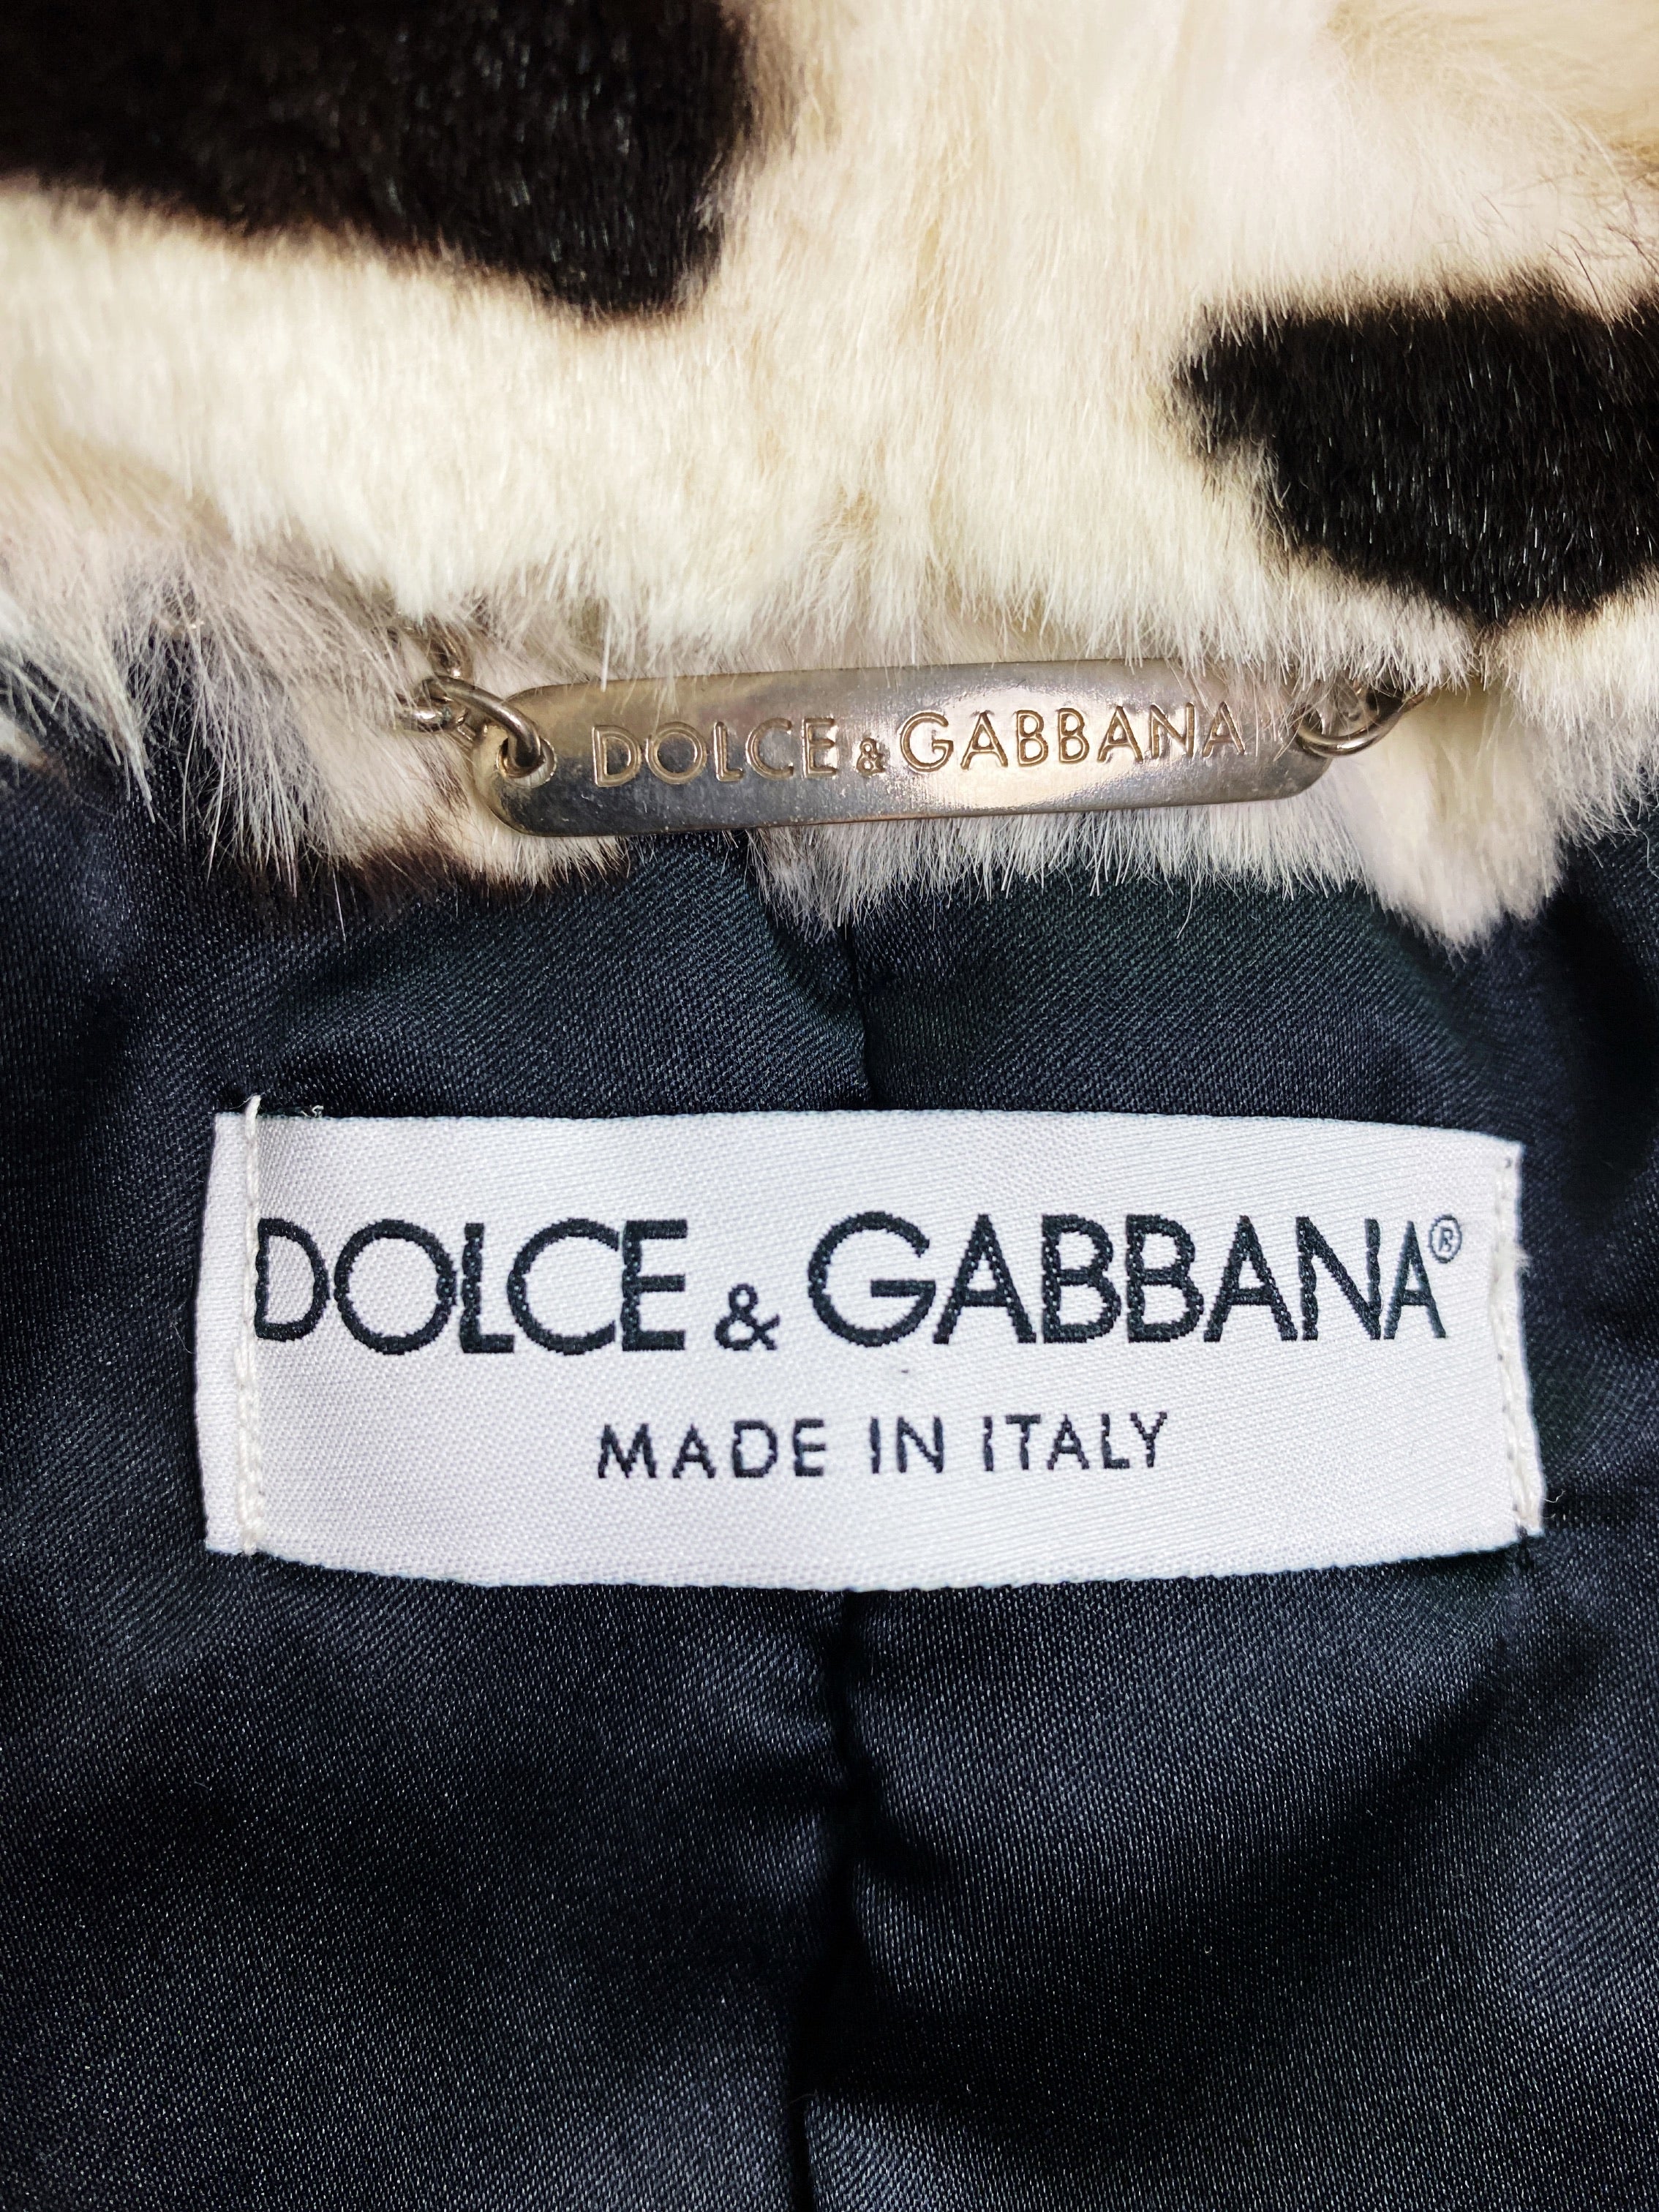 Dolce & Gabbana Fall 1999 Zebra Print Fur Jacket